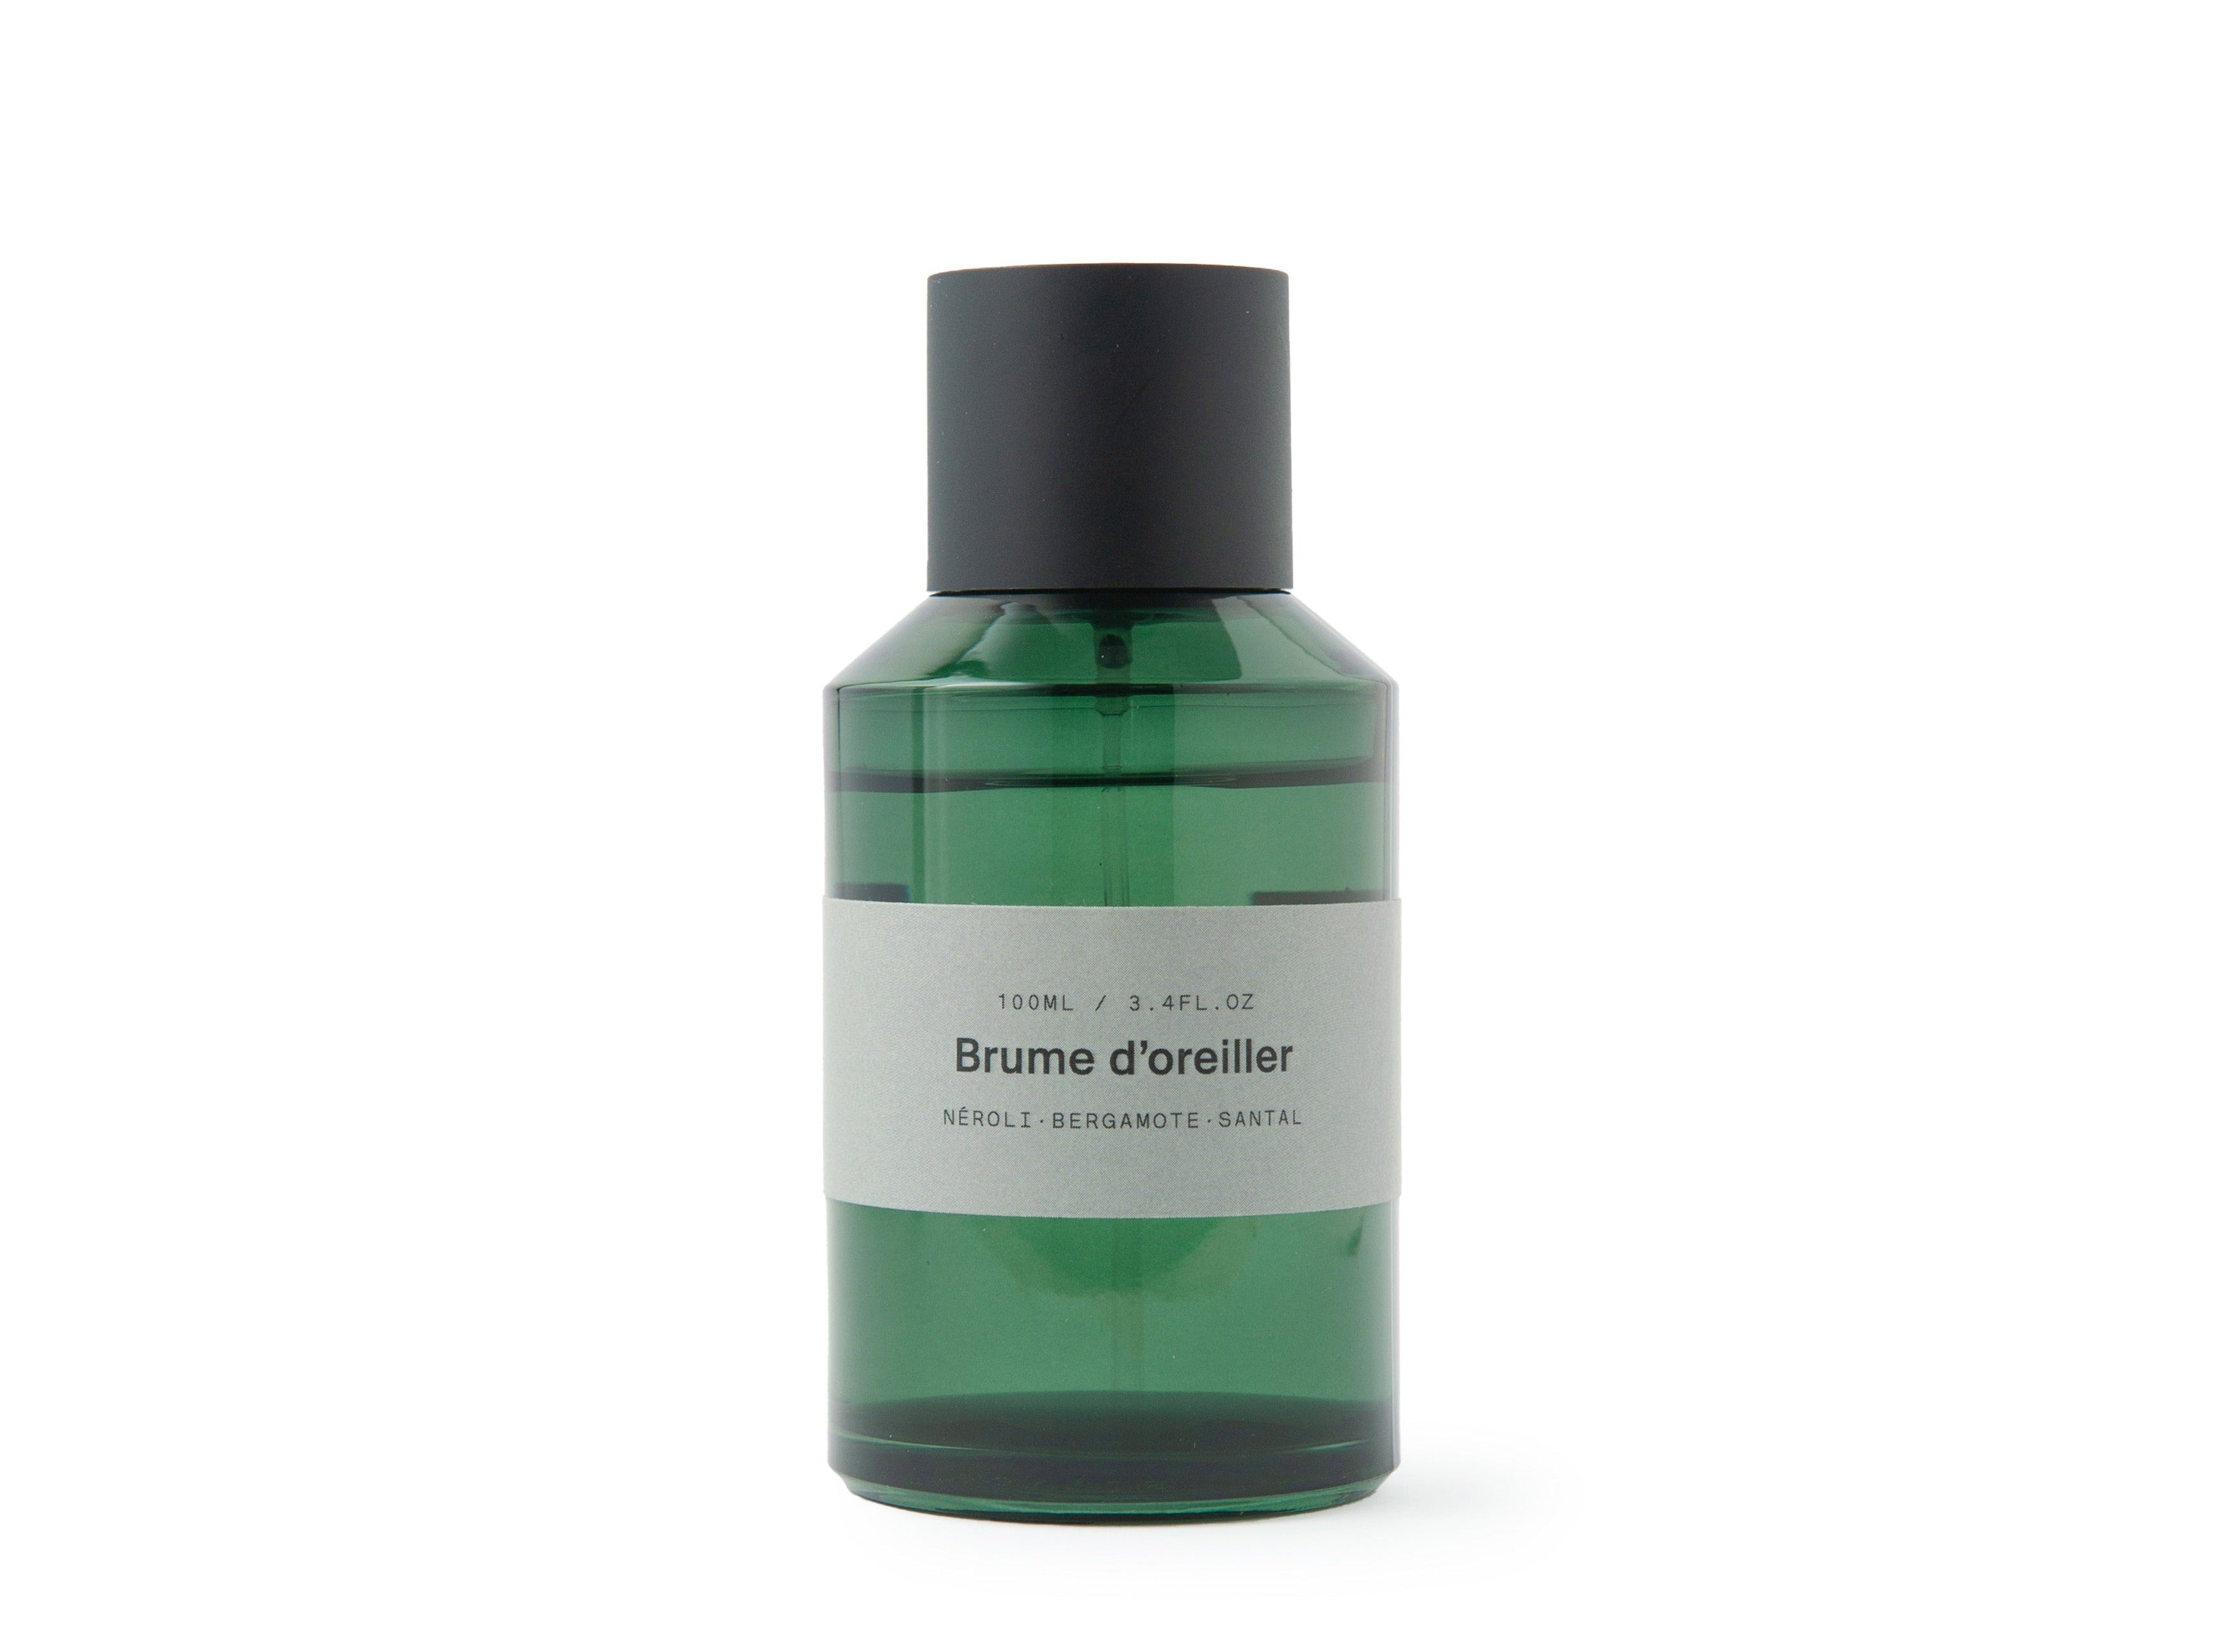 Brume d'Oreiller Marie Jeanne perfume - a fragrance for women and